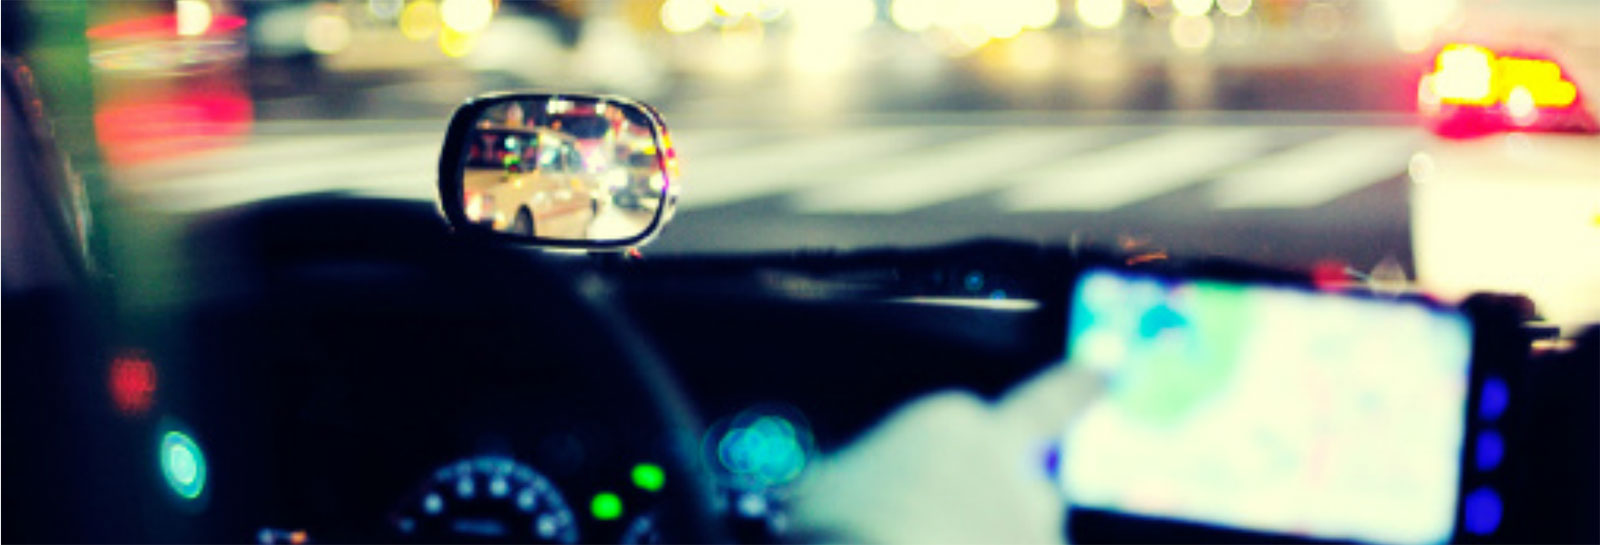 a blurred image of a car's dashboard